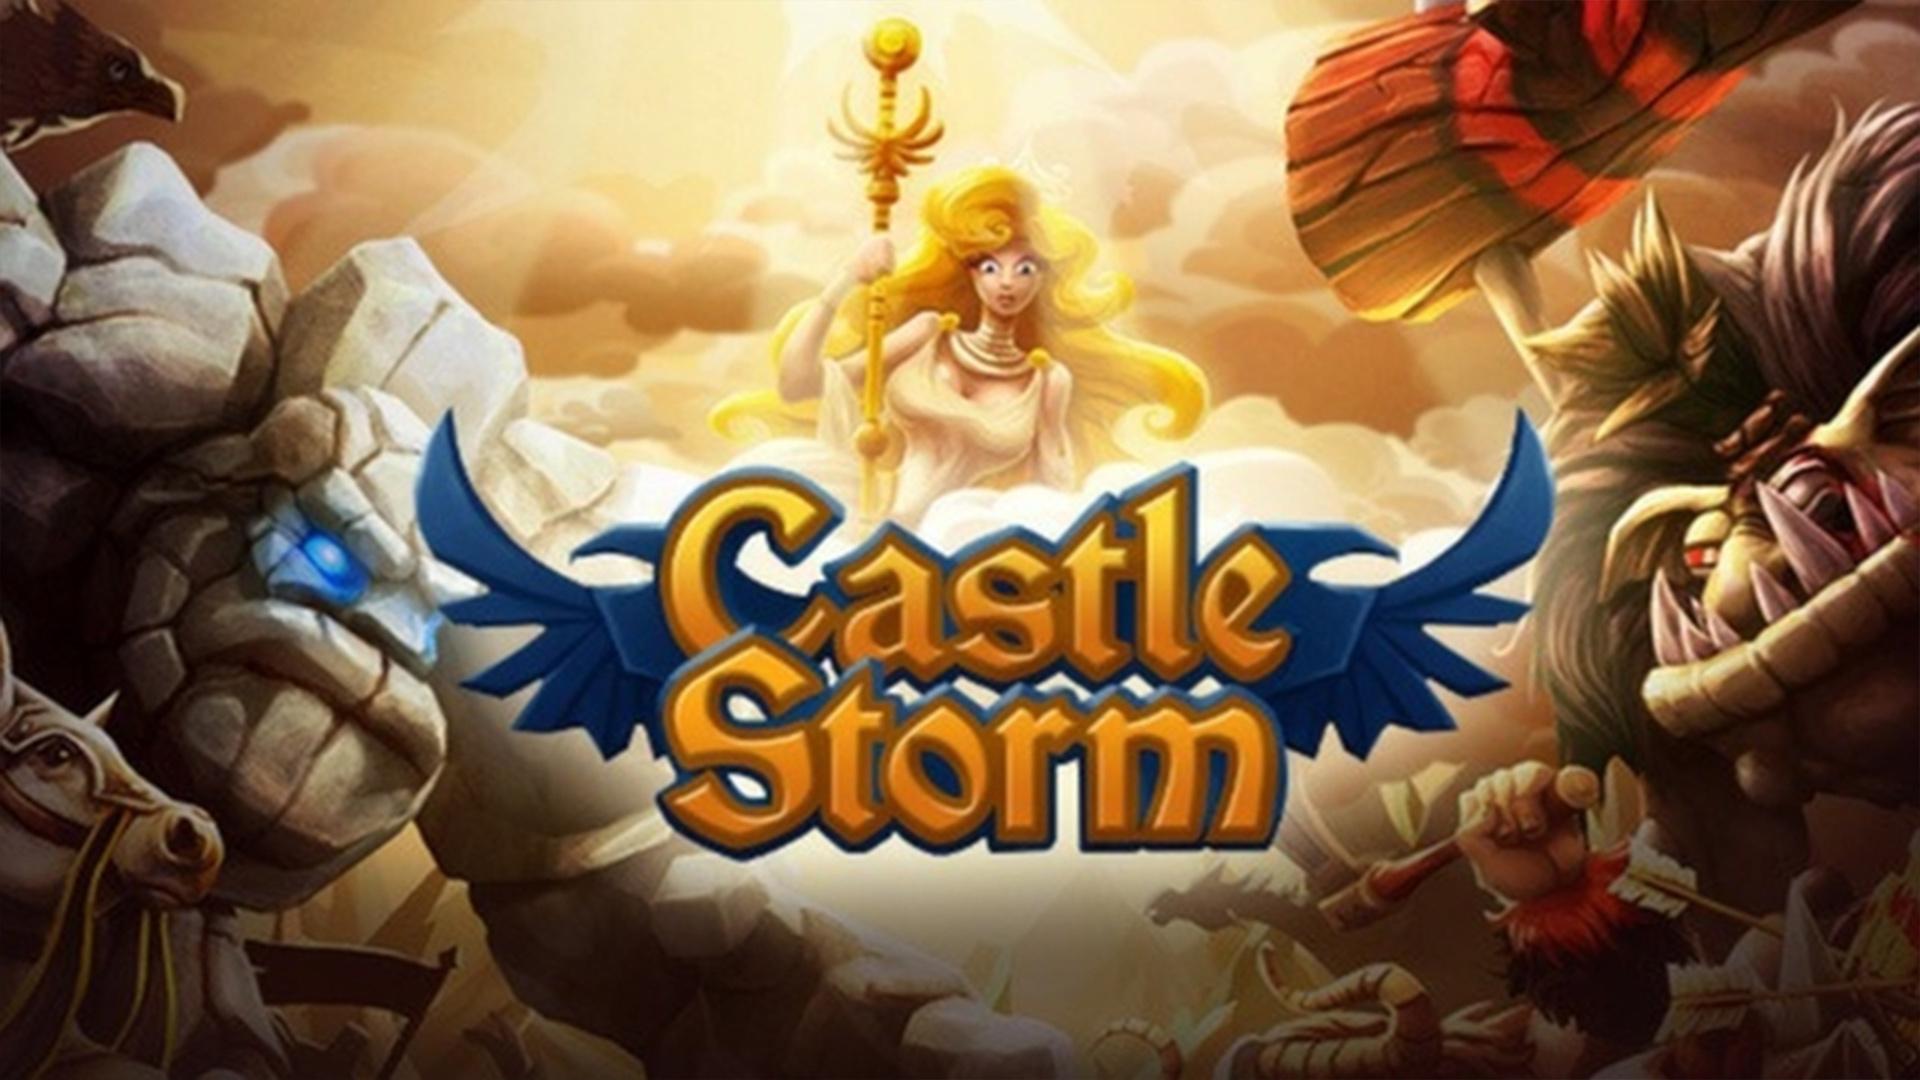 CastleStorm at 1024 x 1024 iPad size wallpapers HD quality